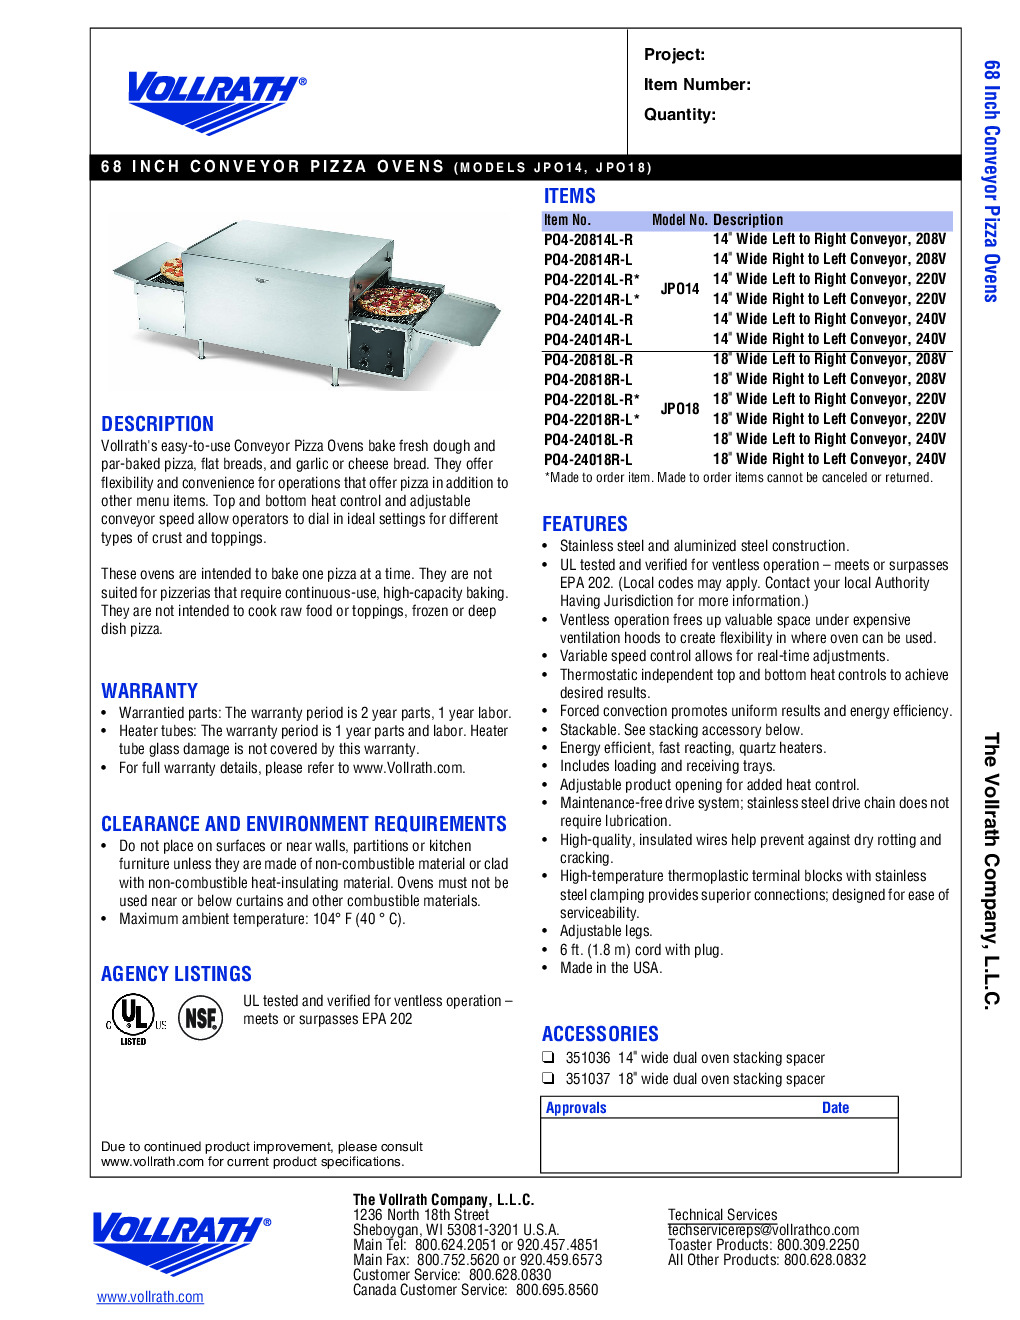 Vollrath PO4-22014L-R Countertop Electric Conveyor Oven, (1) 14